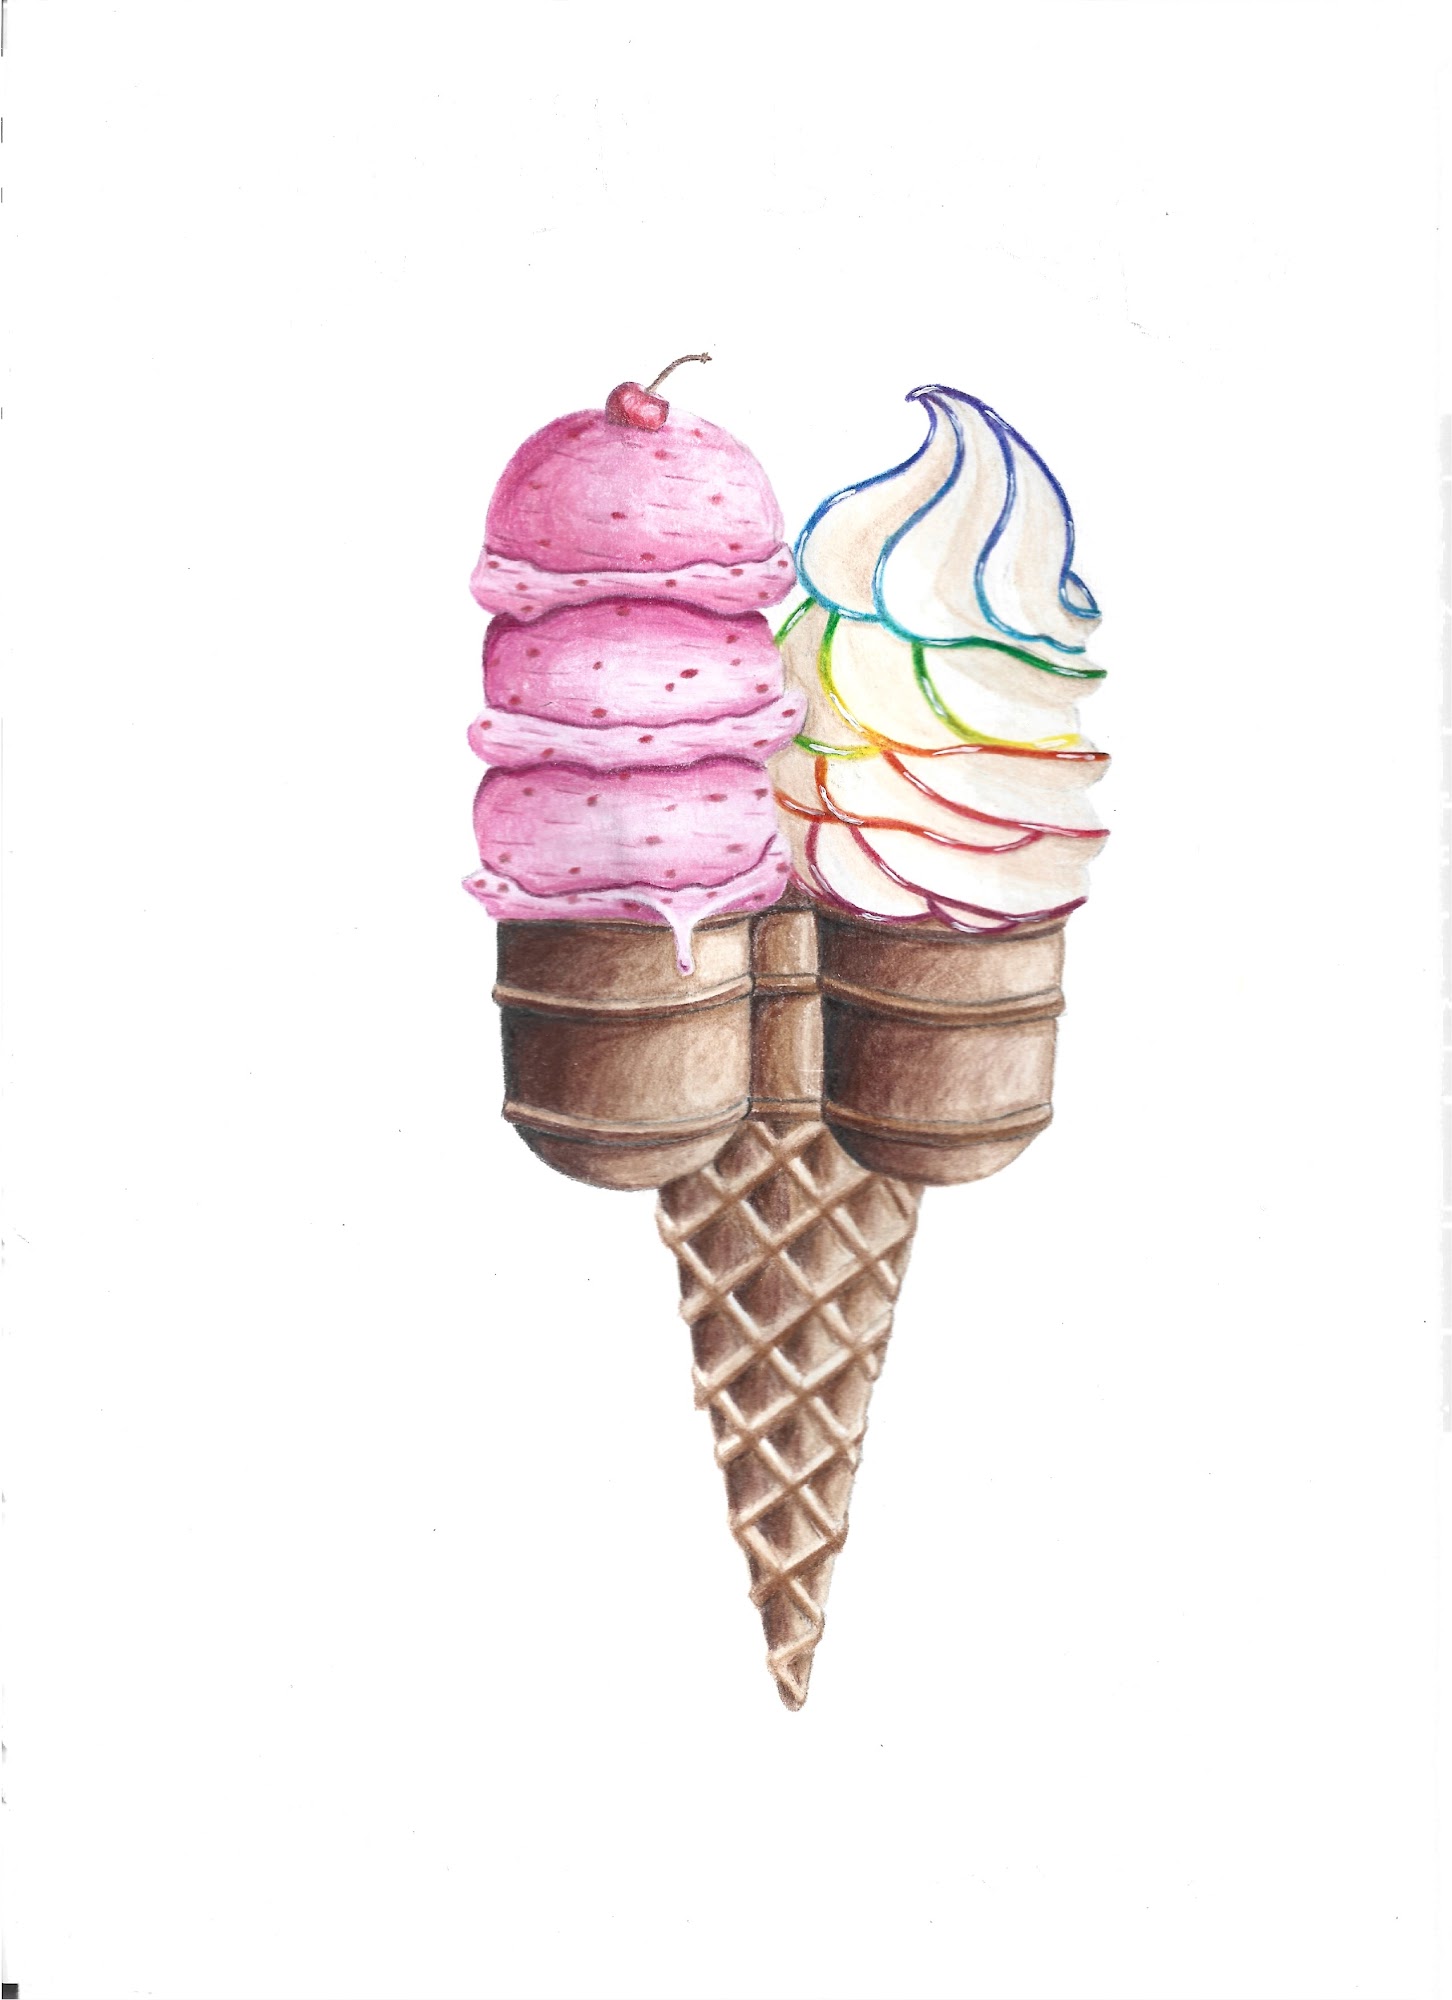 Twin Peaks Ice Cream LLC